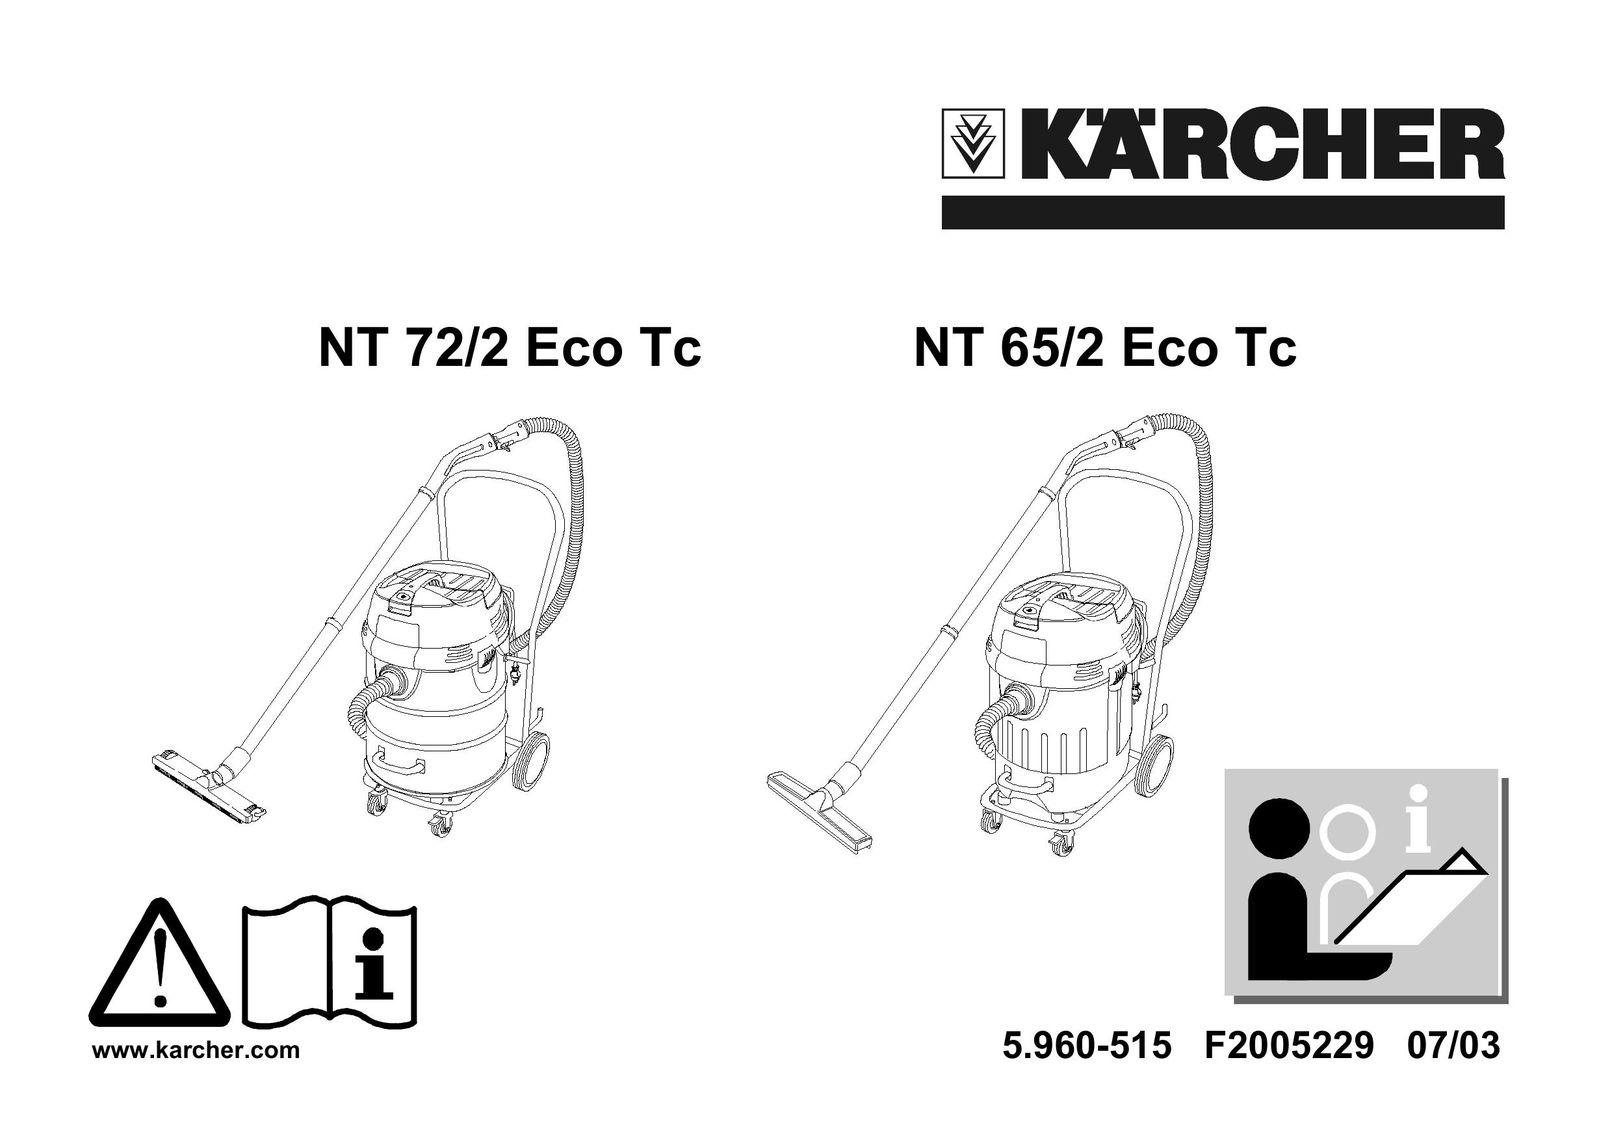 Karcher NT 72/2 ECO TC Vacuum Cleaner User Manual